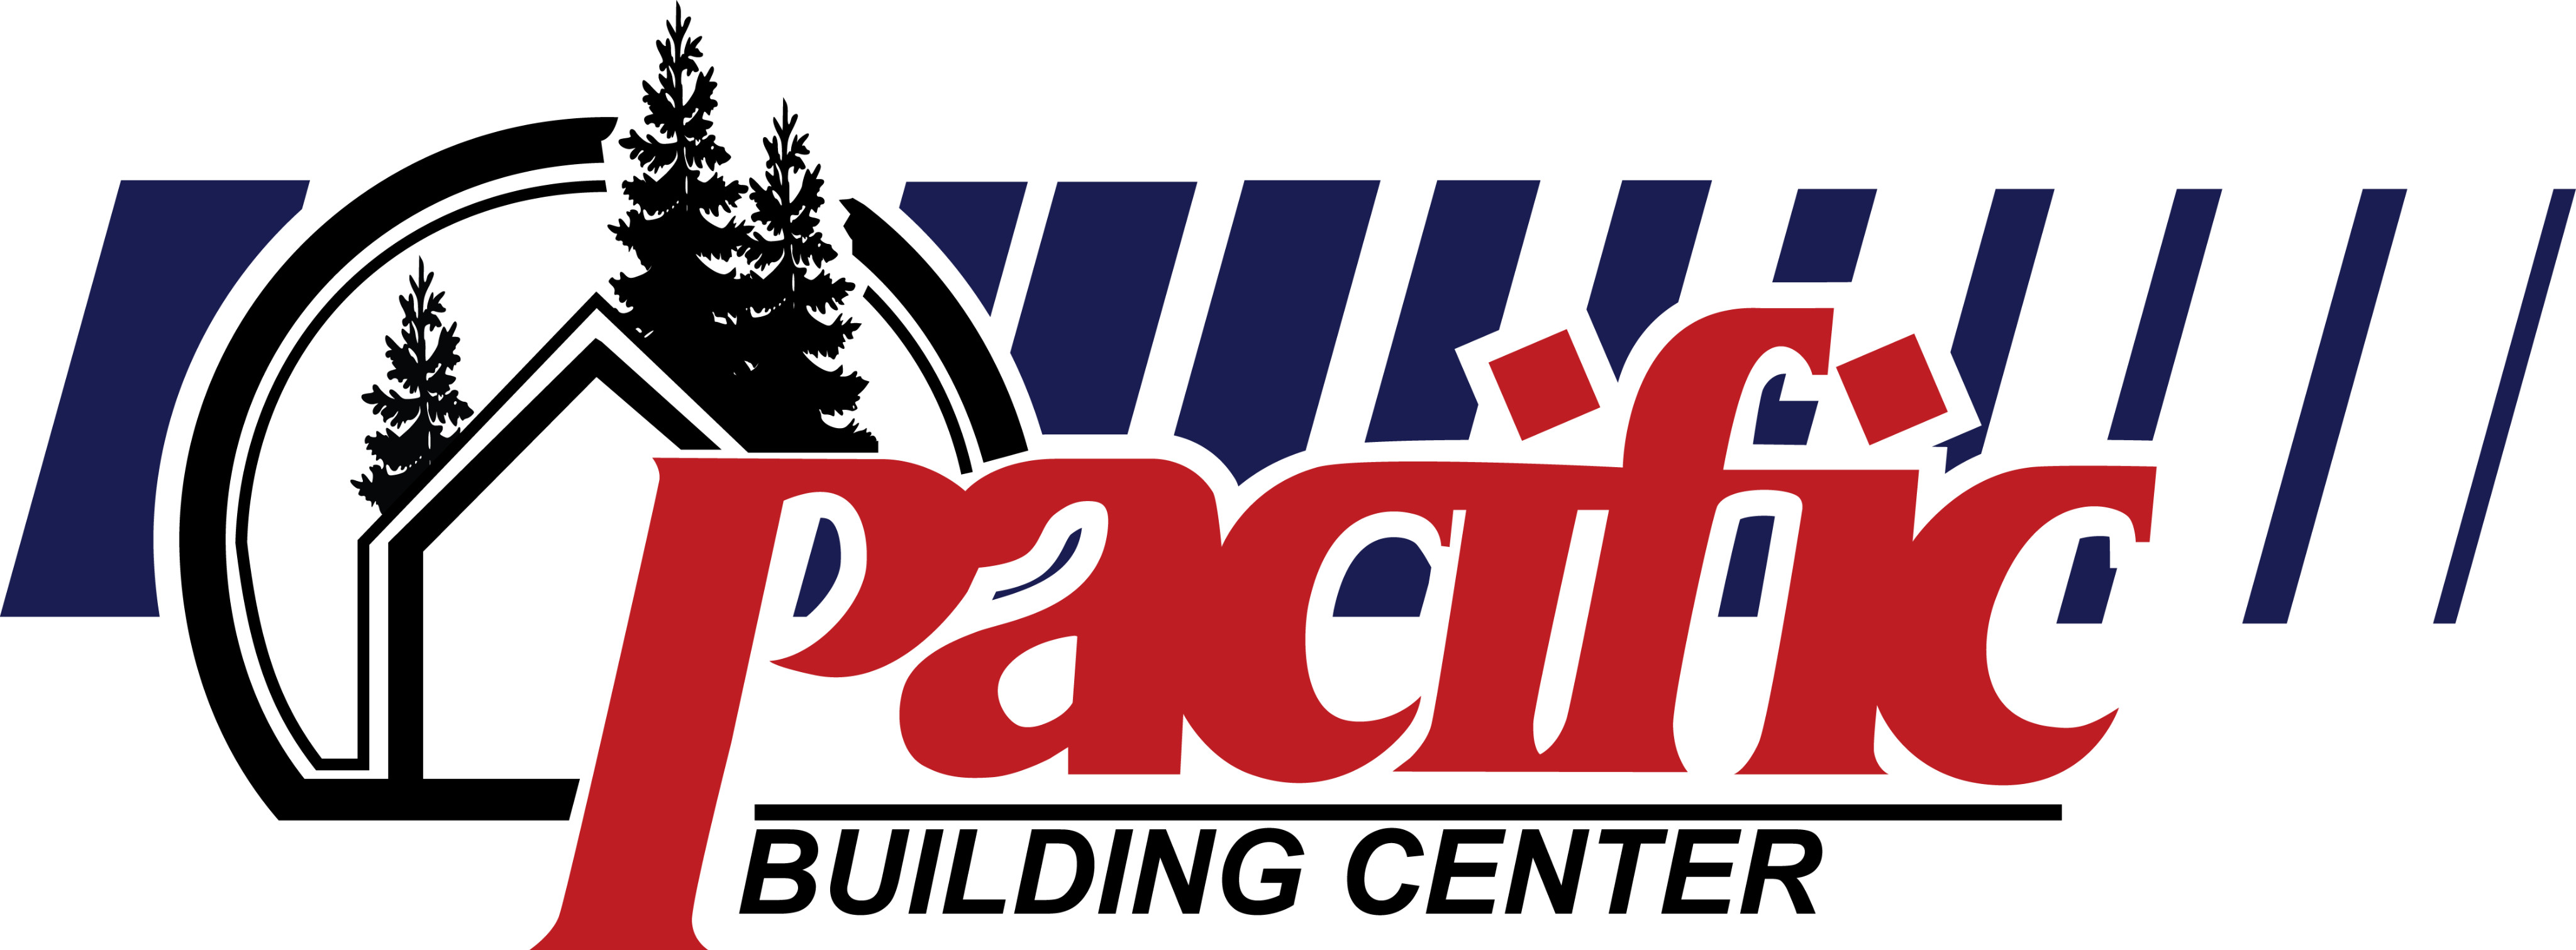 Pacific Building Center logo